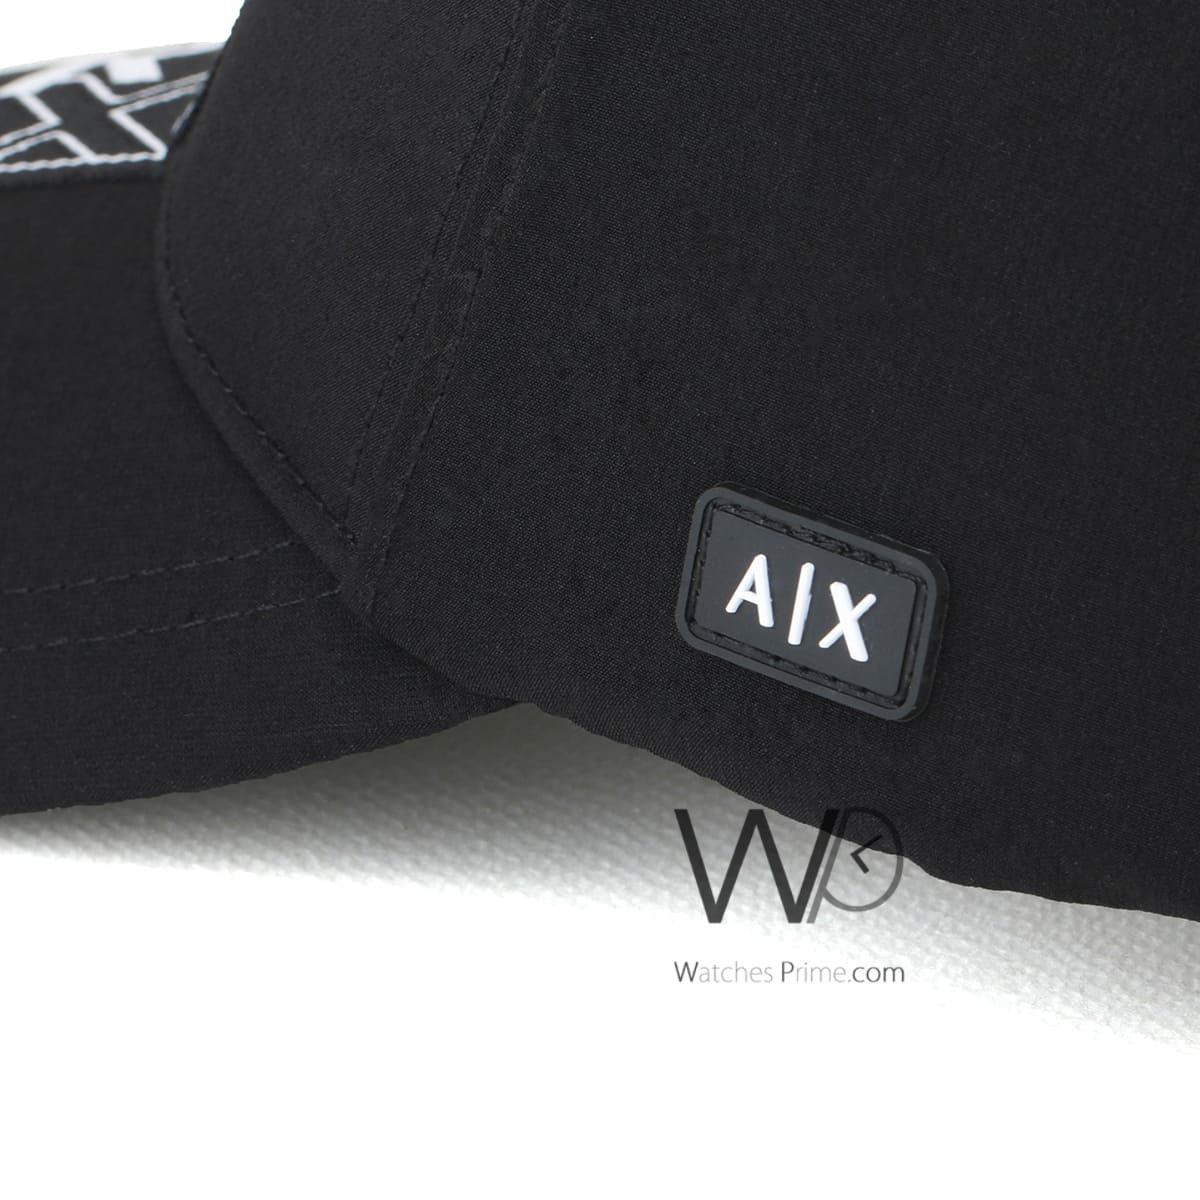 Armani Exchange AX Black Baseball Cap | Watches Prime